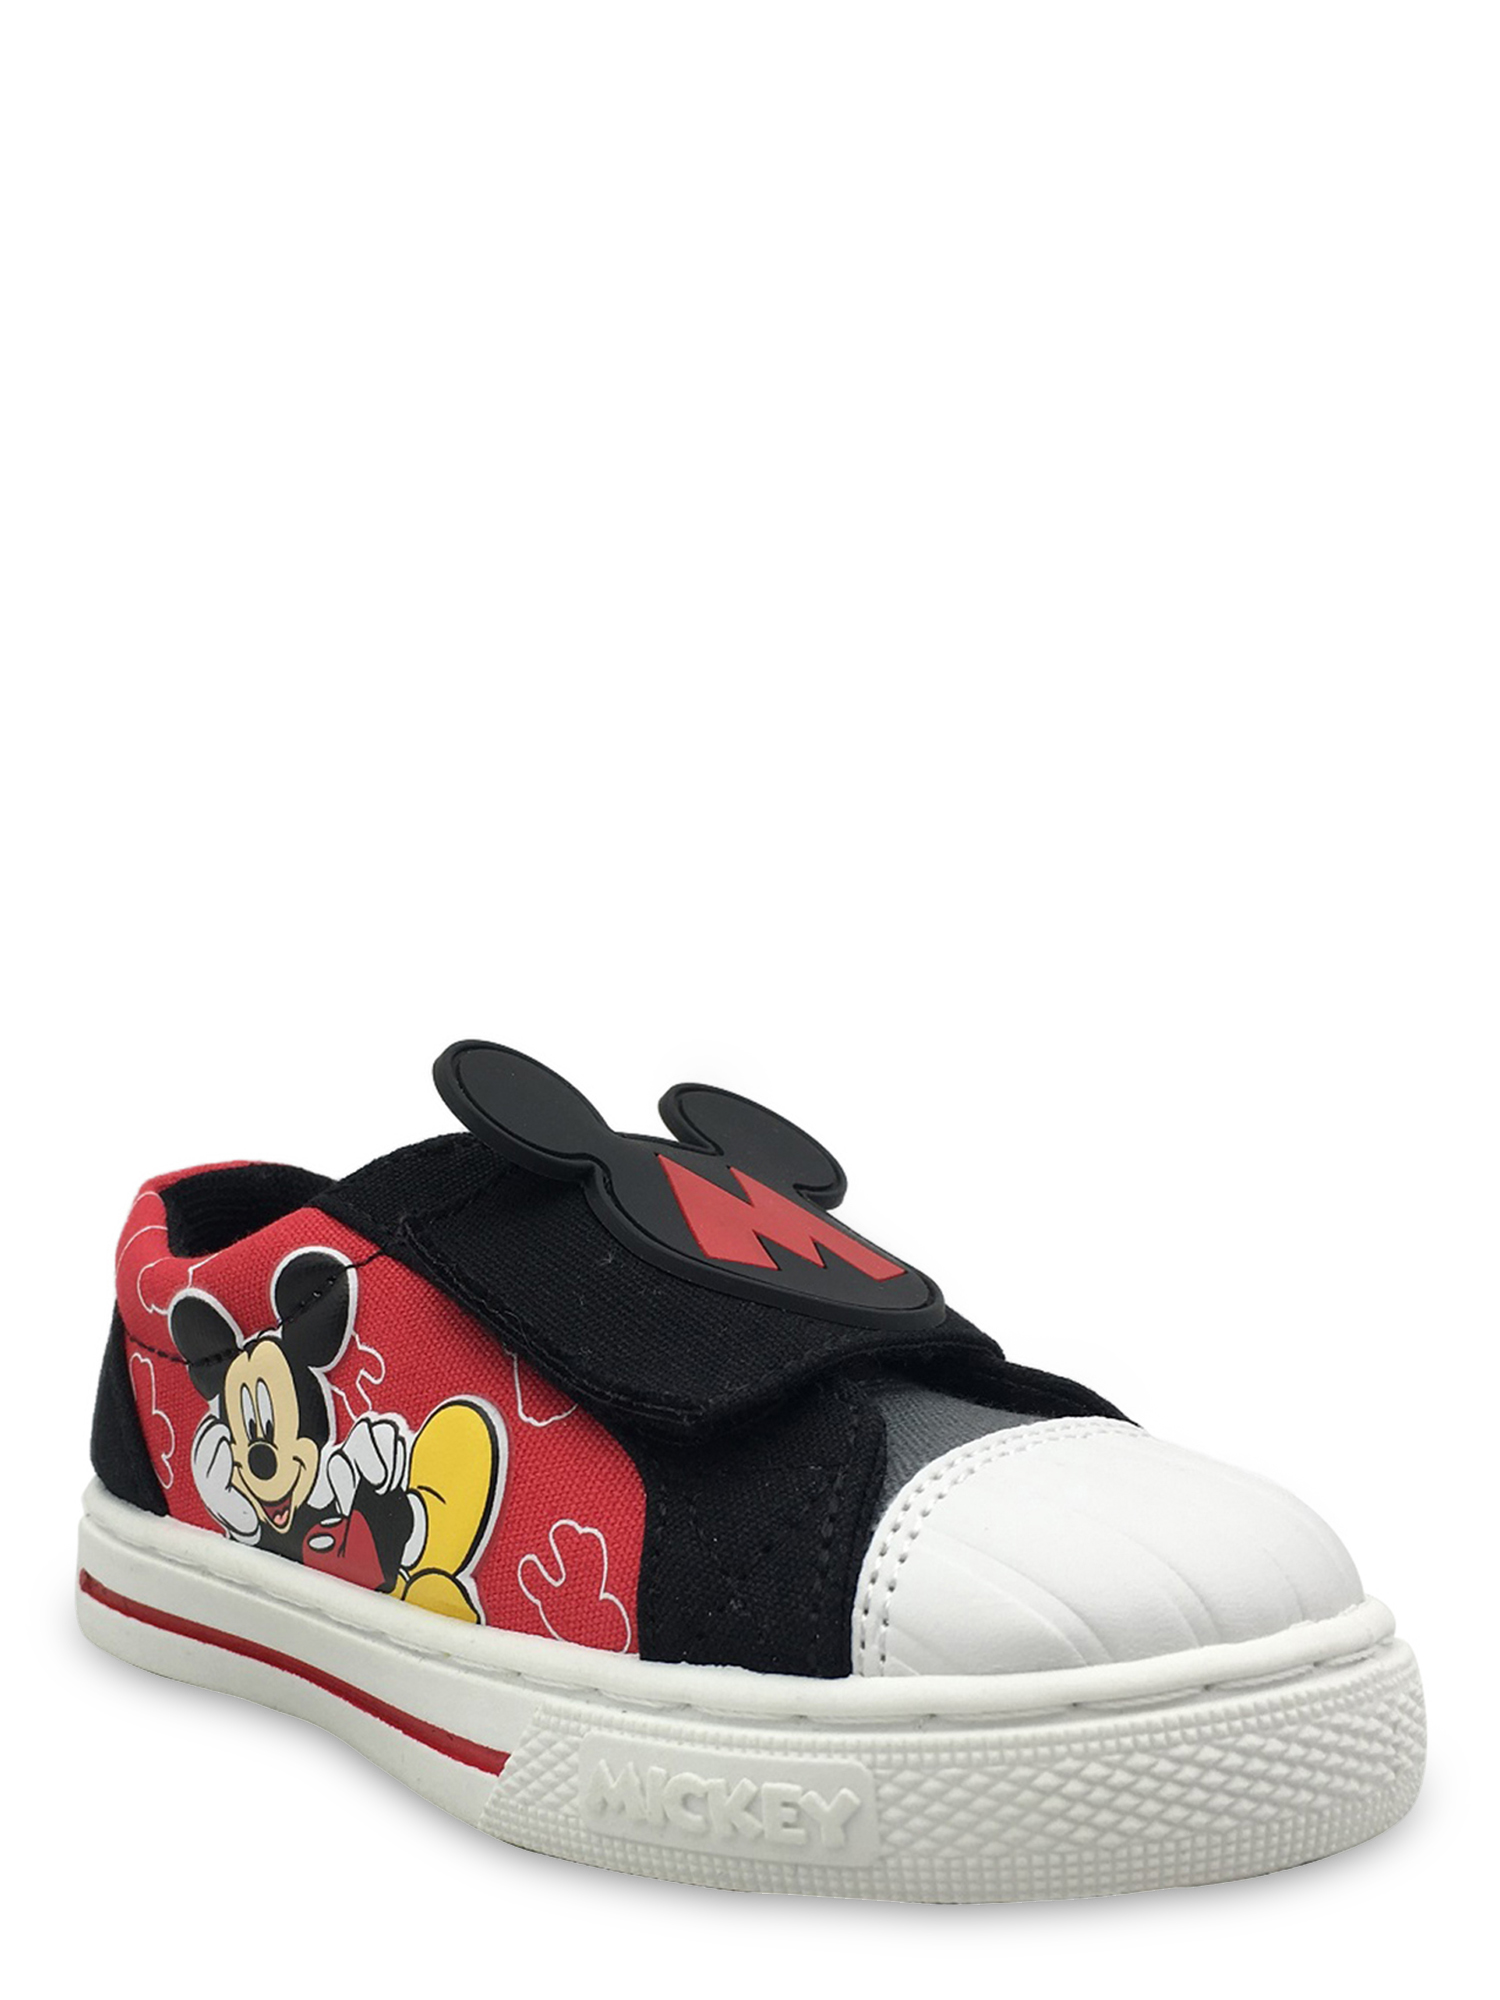 Mickey Mouse Cap Toe Casual Sn...